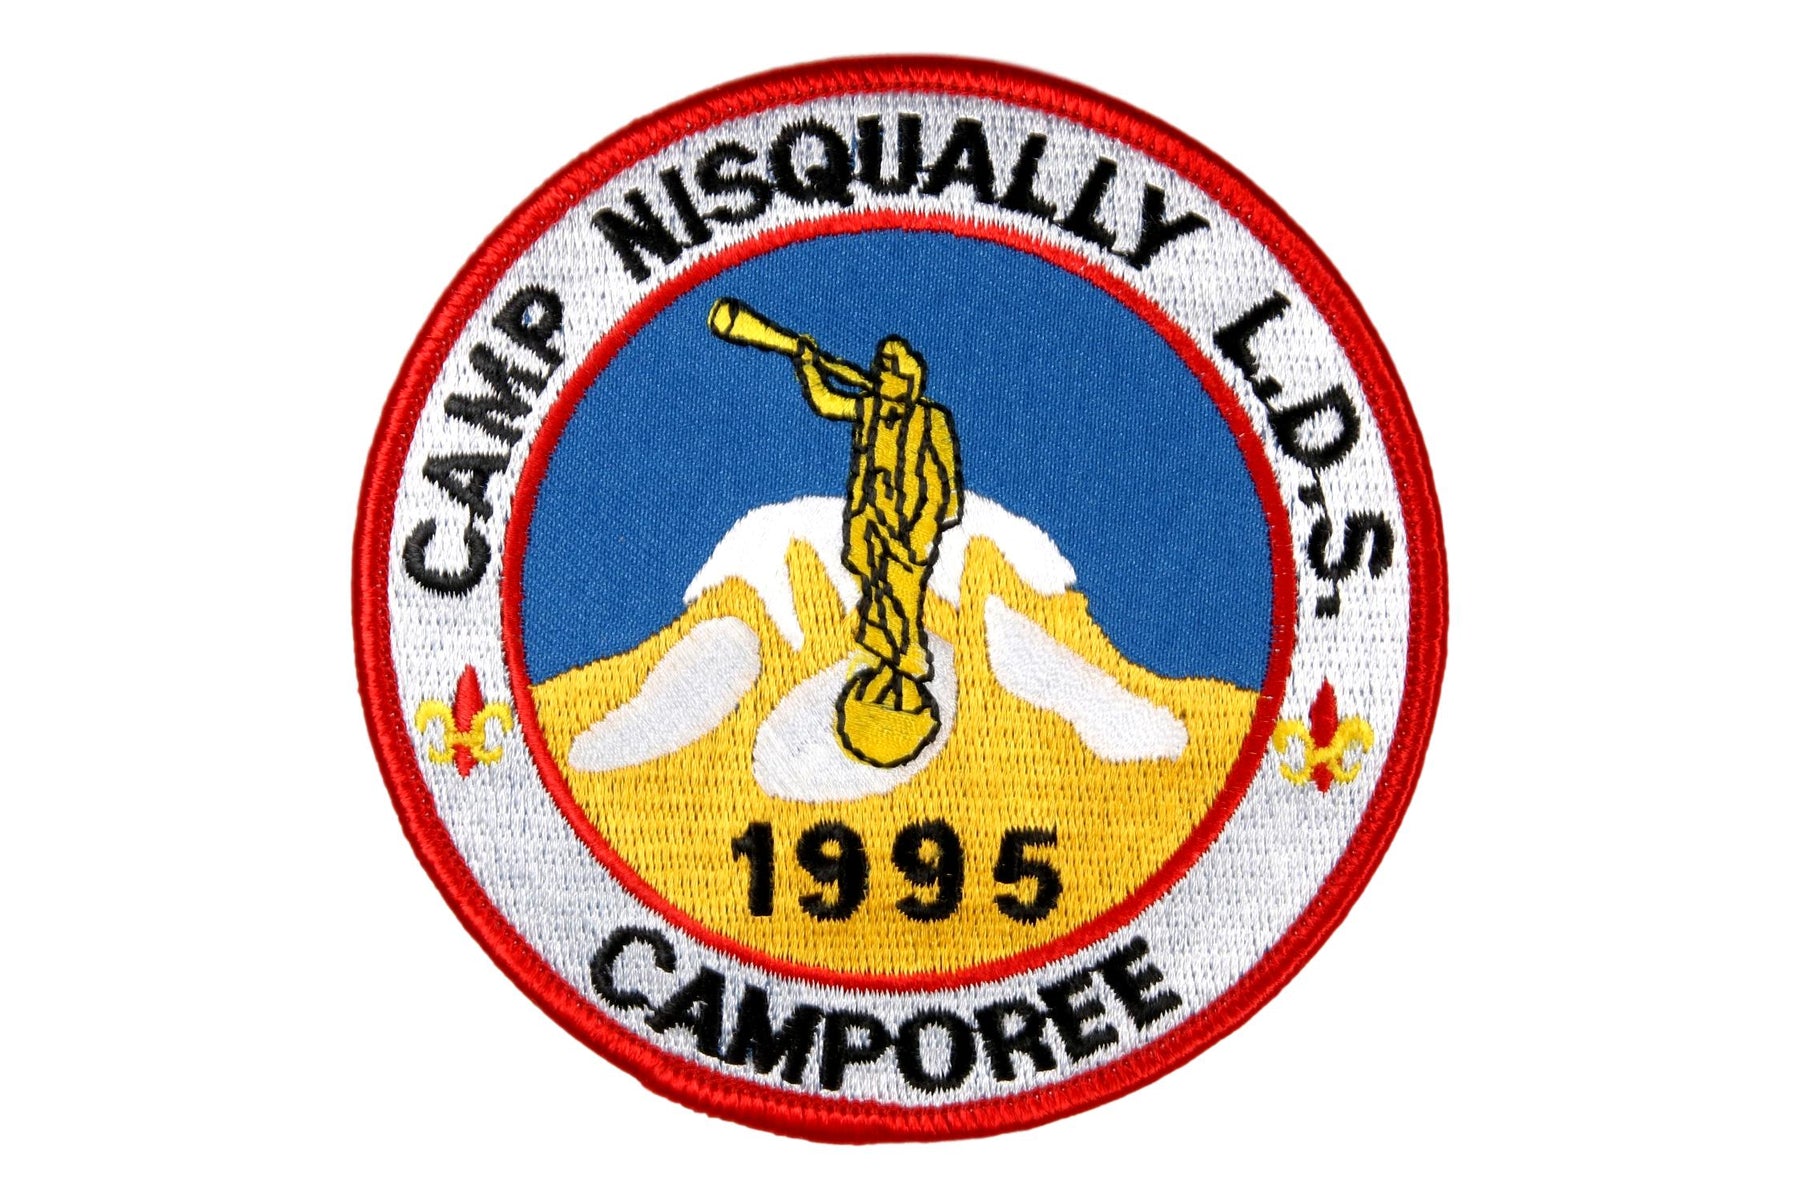 1995 Camp Nisqually Camporee Patch